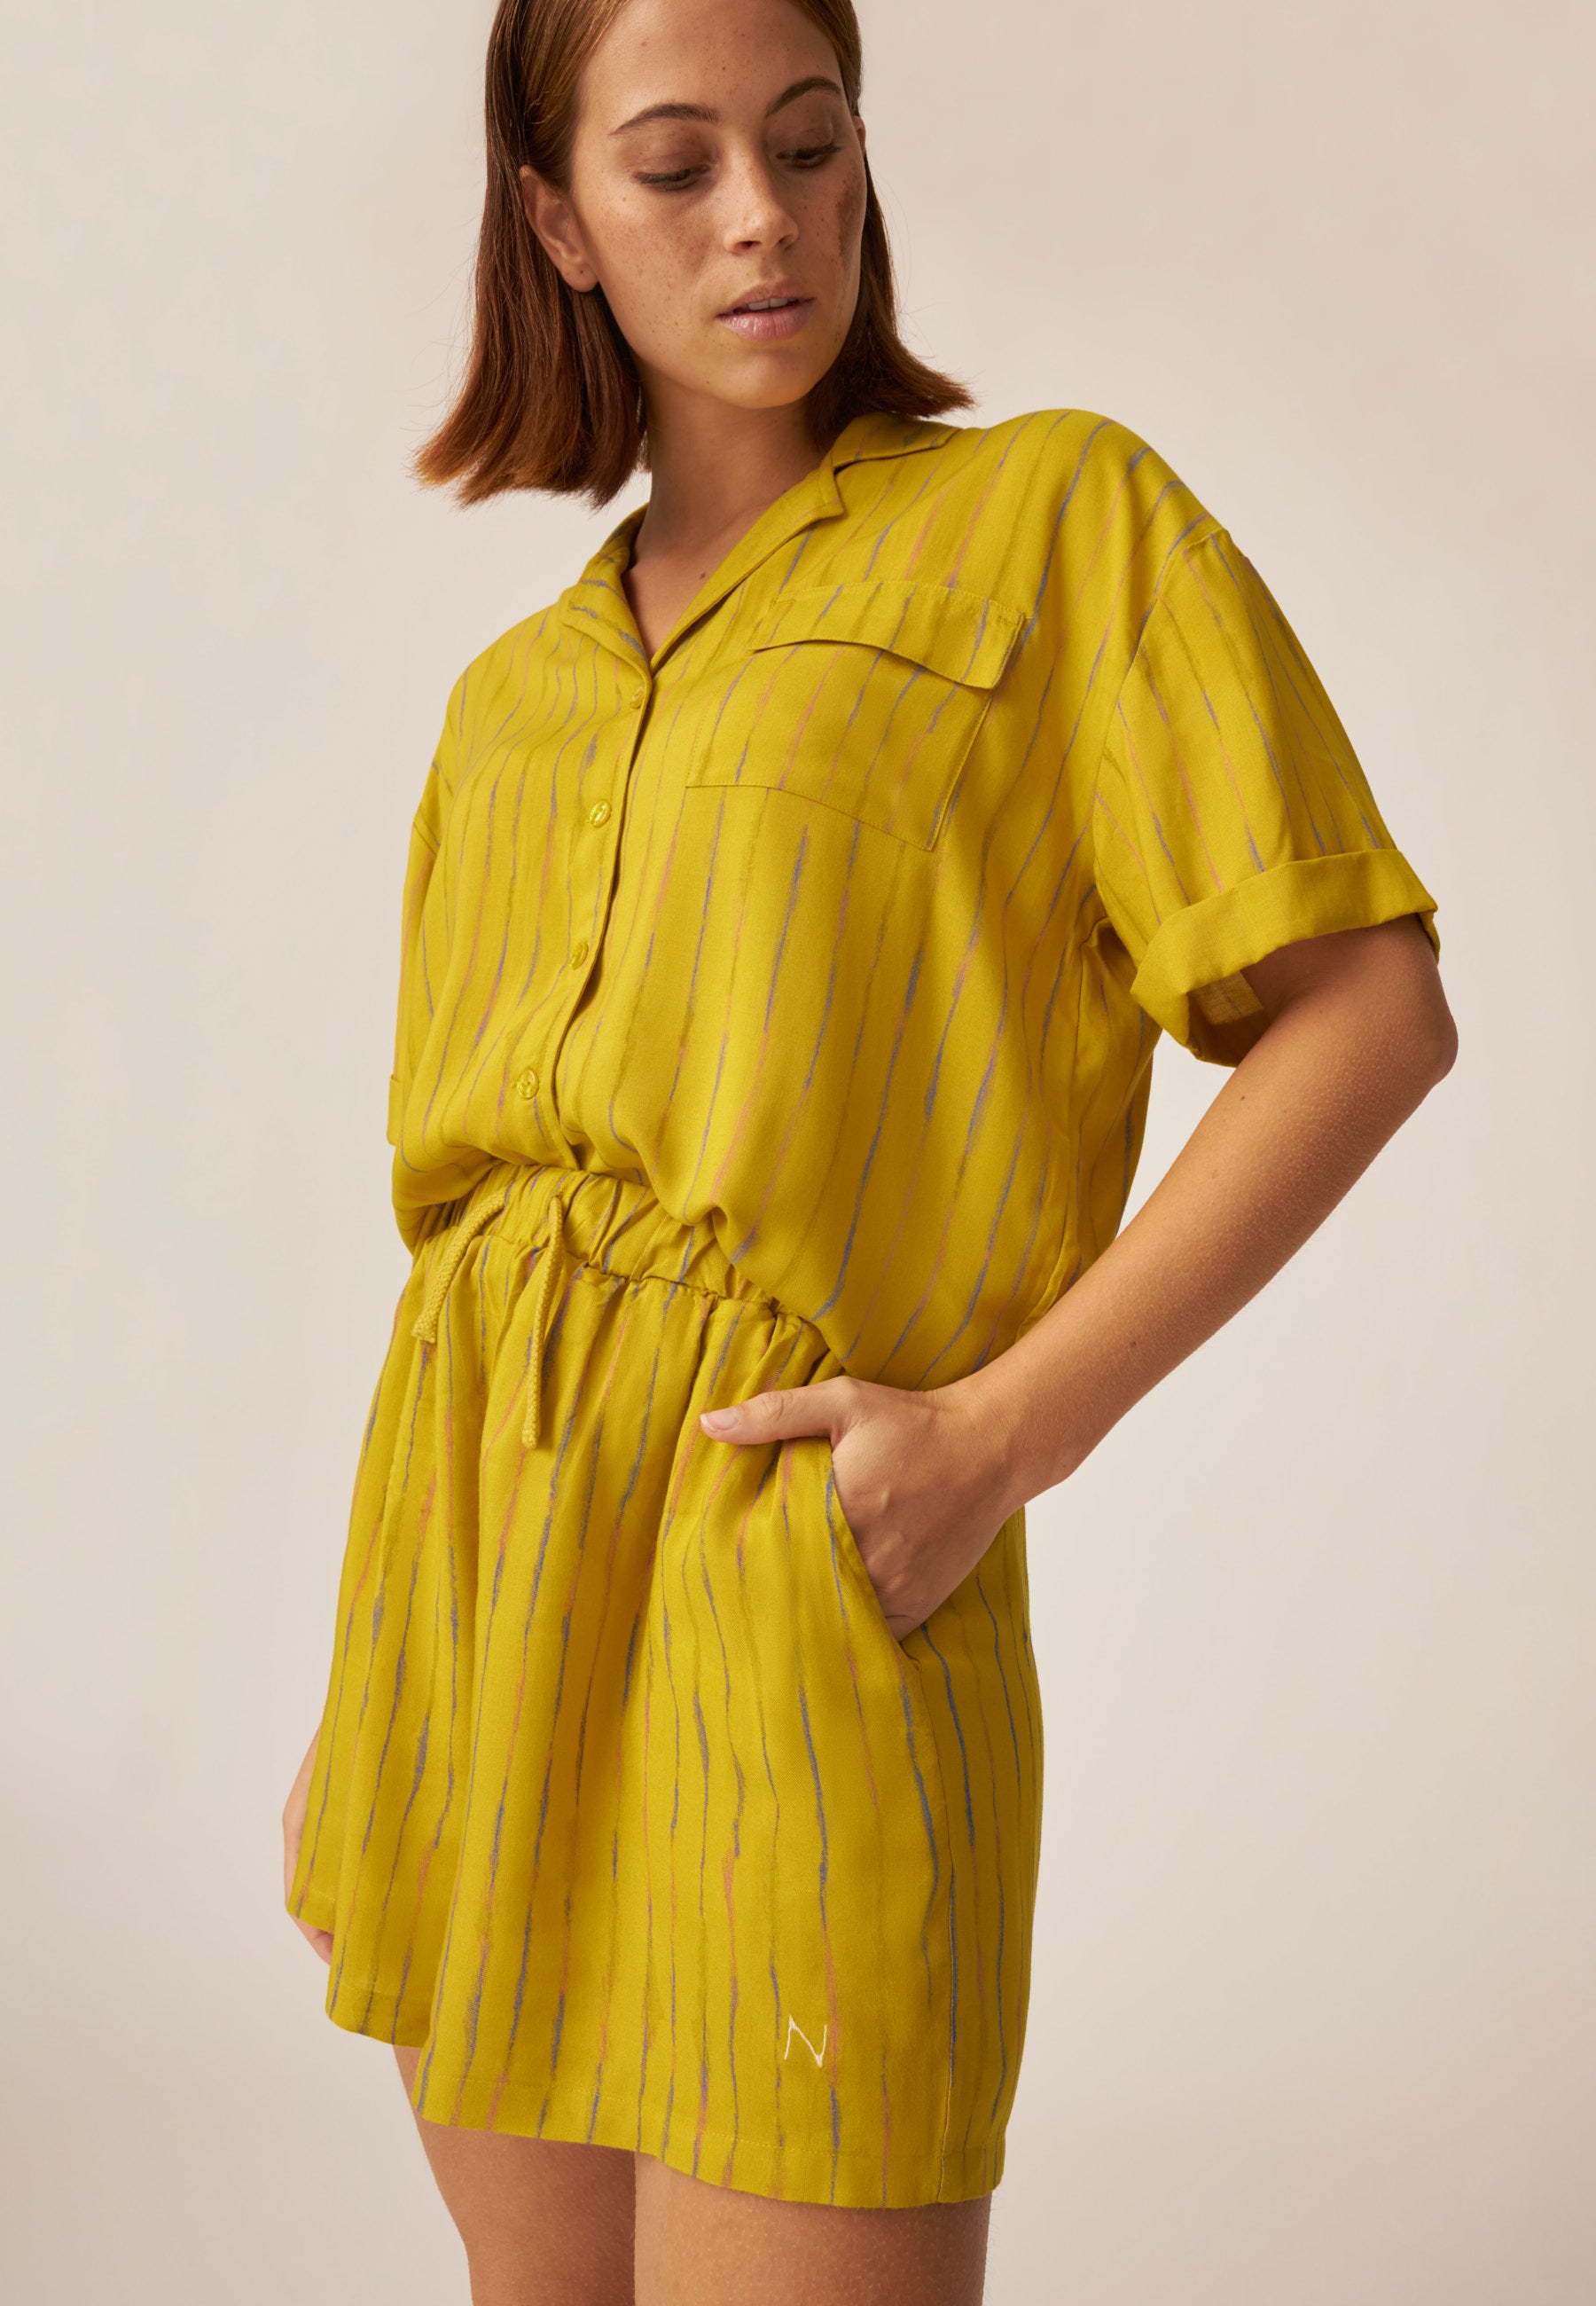 Short Sleeve Shirt with Buttons - Summer Break - Golden Olive Print